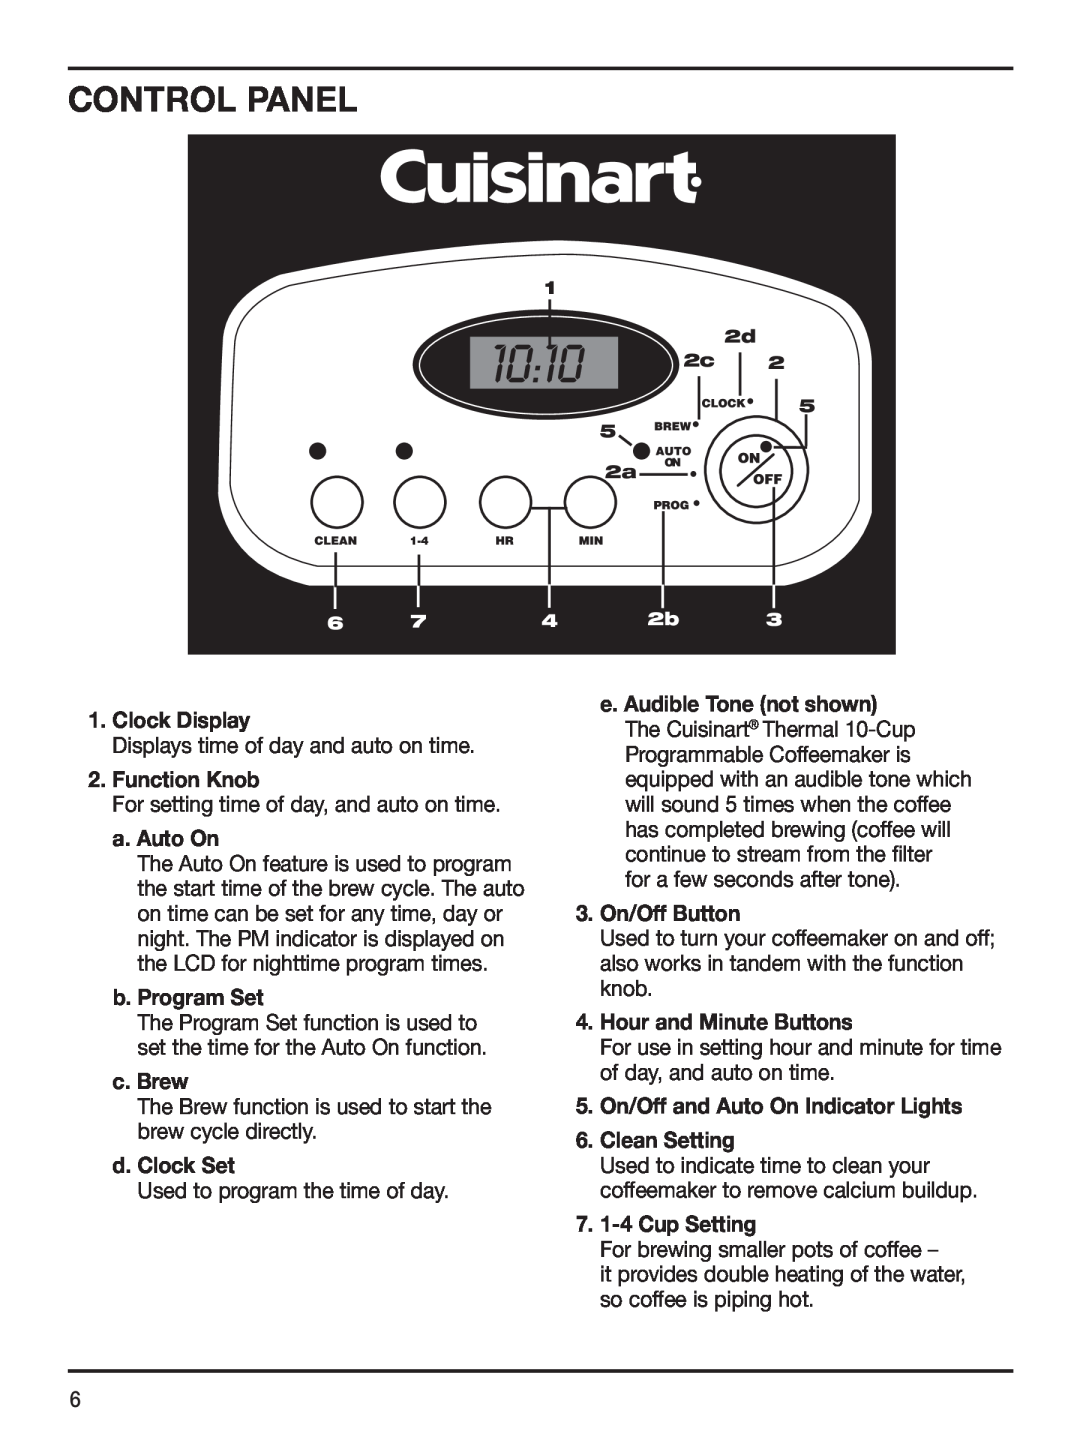 Cuisinart DCC-1150 Series Control Panel, Clock Display, Function Knob, a. Auto On, b. Program Set, c. Brew, d. Clock Set 